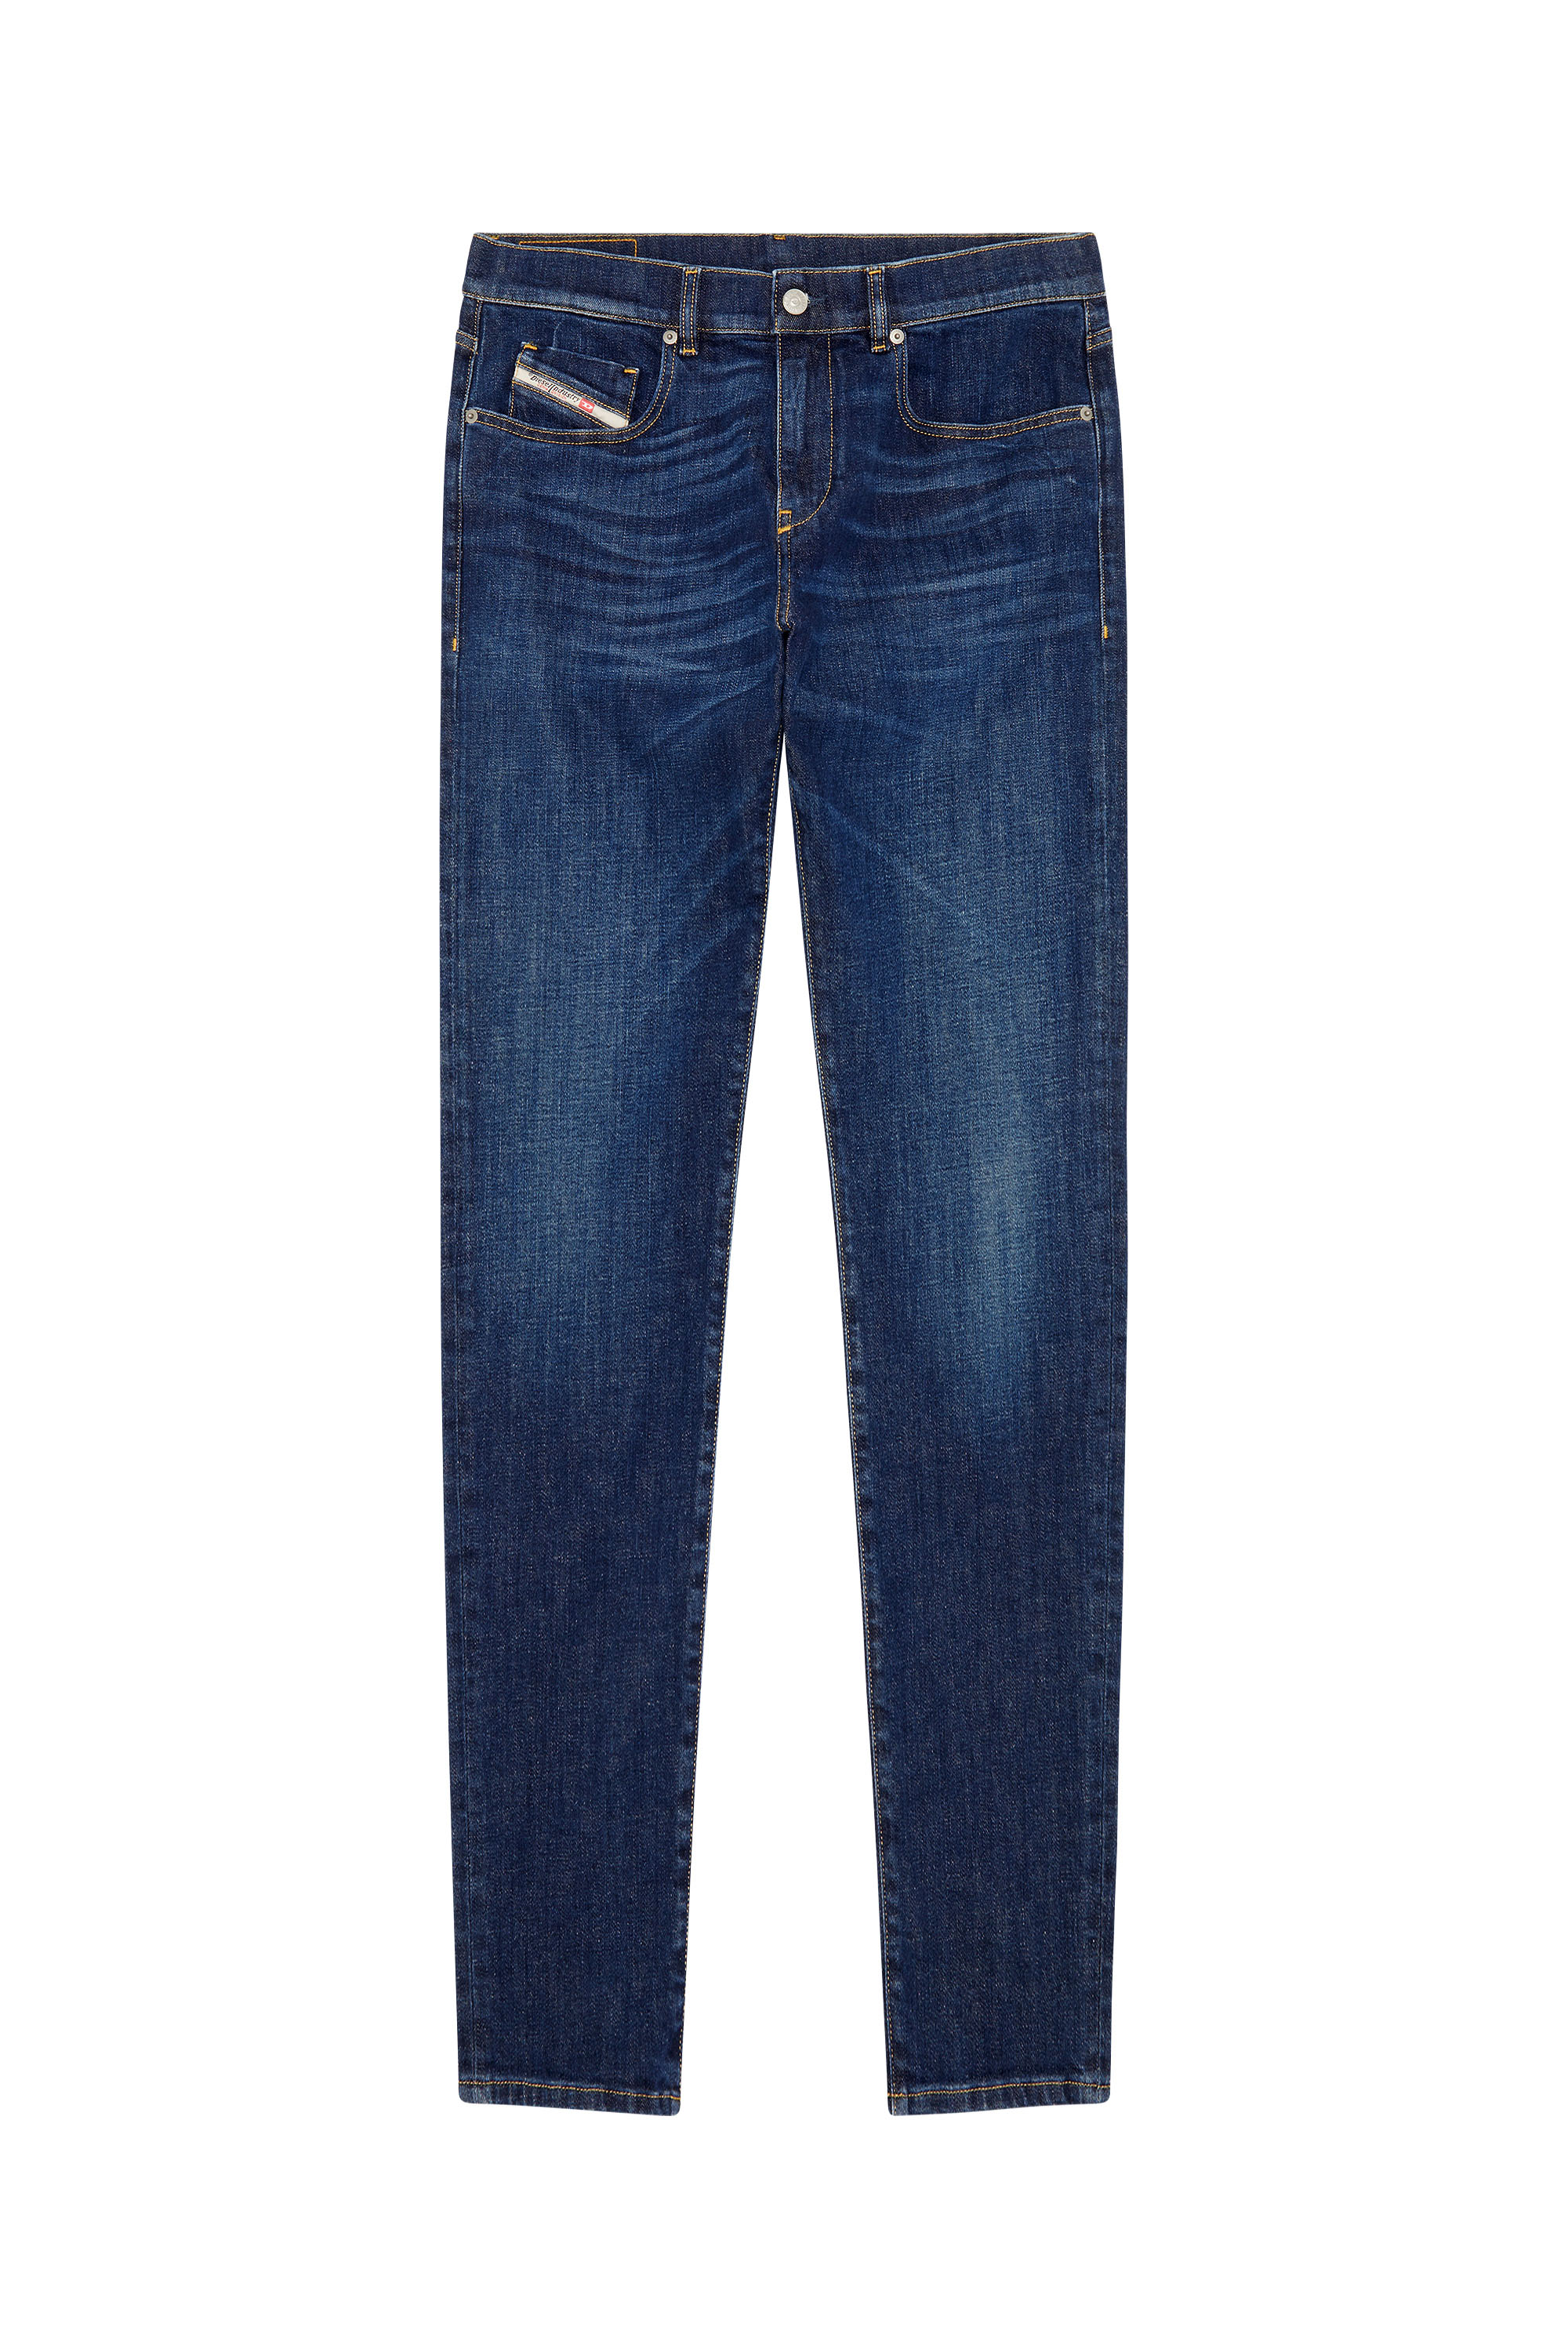 2019 D-STRUKT 09B90 Slim Jeans, Bleu Foncé - Jeans